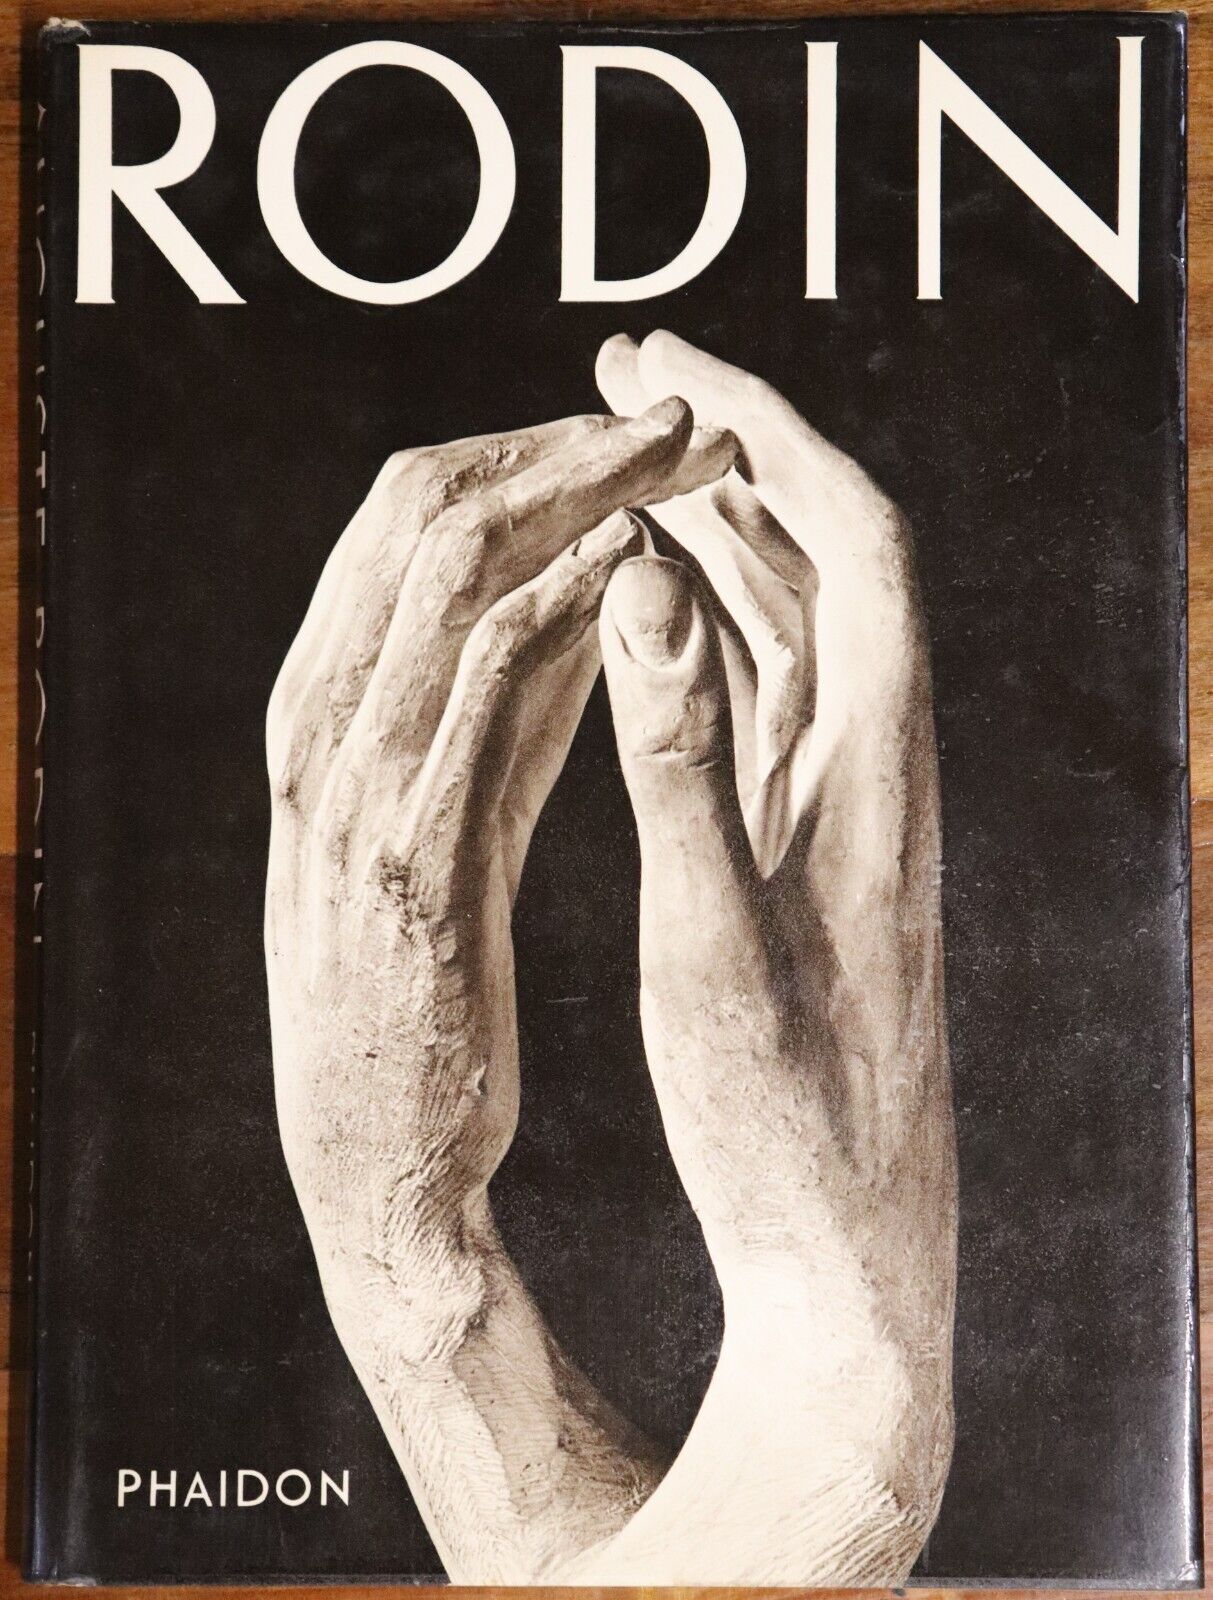 Rodin Sculptures by L Goldscheider - 1964 - 1st Edition French Artist Book